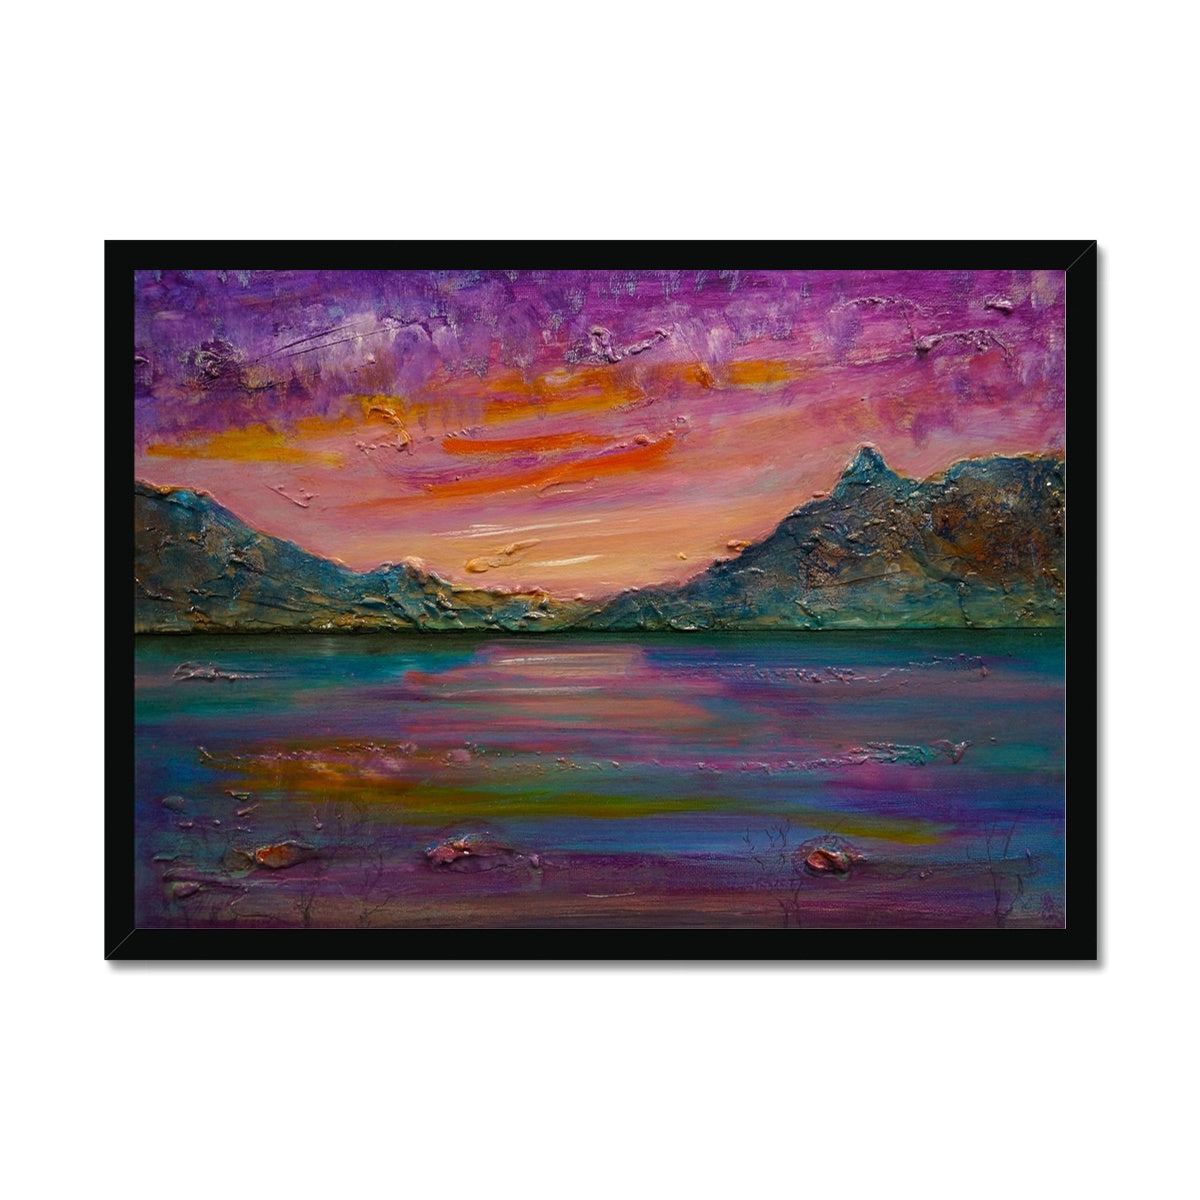 Loch Leven Sunset Painting | Framed Prints From Scotland-Framed Prints-Scottish Lochs & Mountains Art Gallery-A2 Landscape-Black Frame-Paintings, Prints, Homeware, Art Gifts From Scotland By Scottish Artist Kevin Hunter